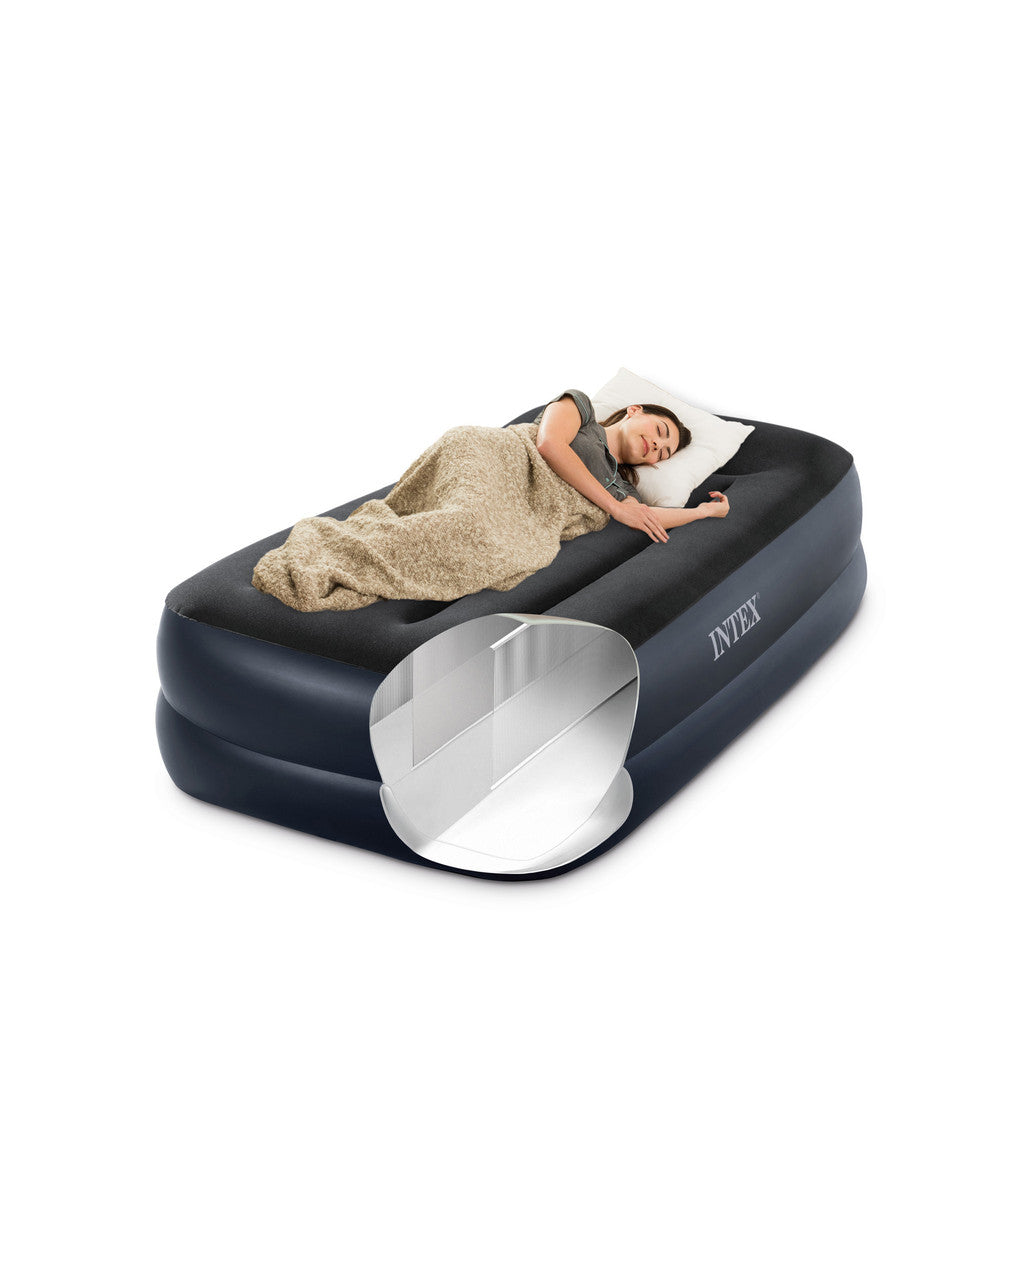 Intex Dura Beam Pillow Rest Raised Air Mattress